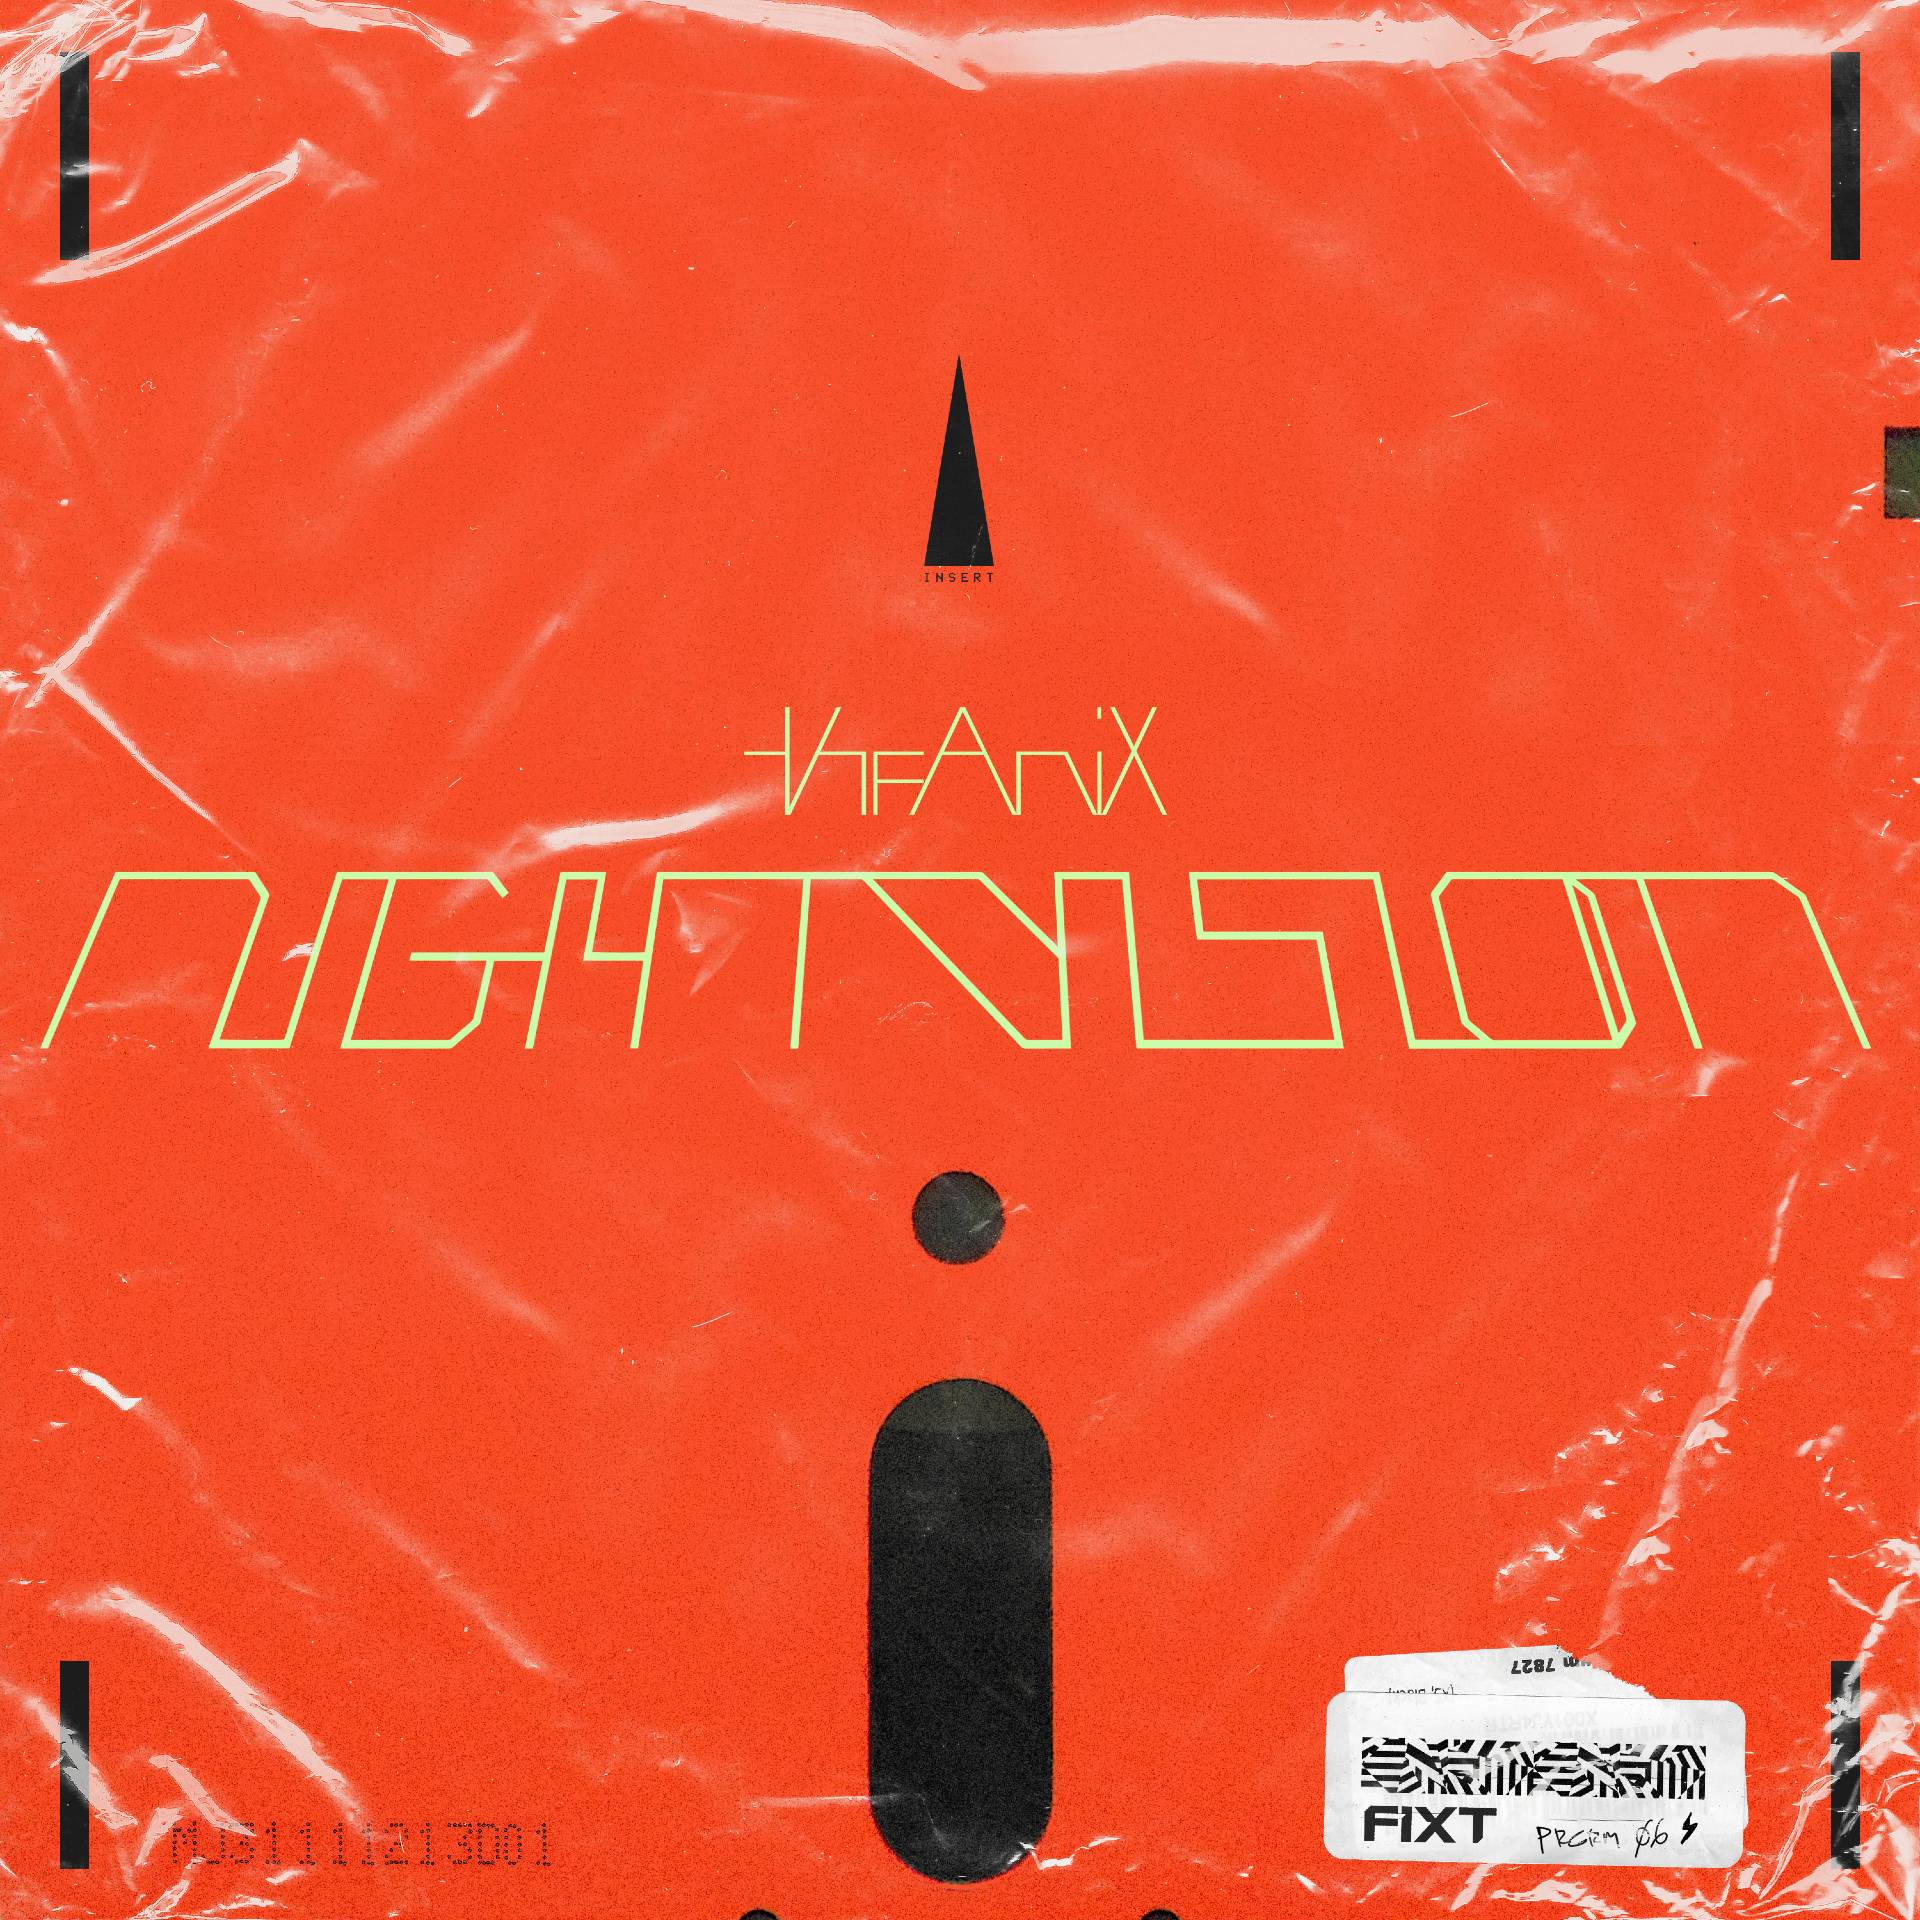 The Anix ‘NIGHTVISION’ album artwork